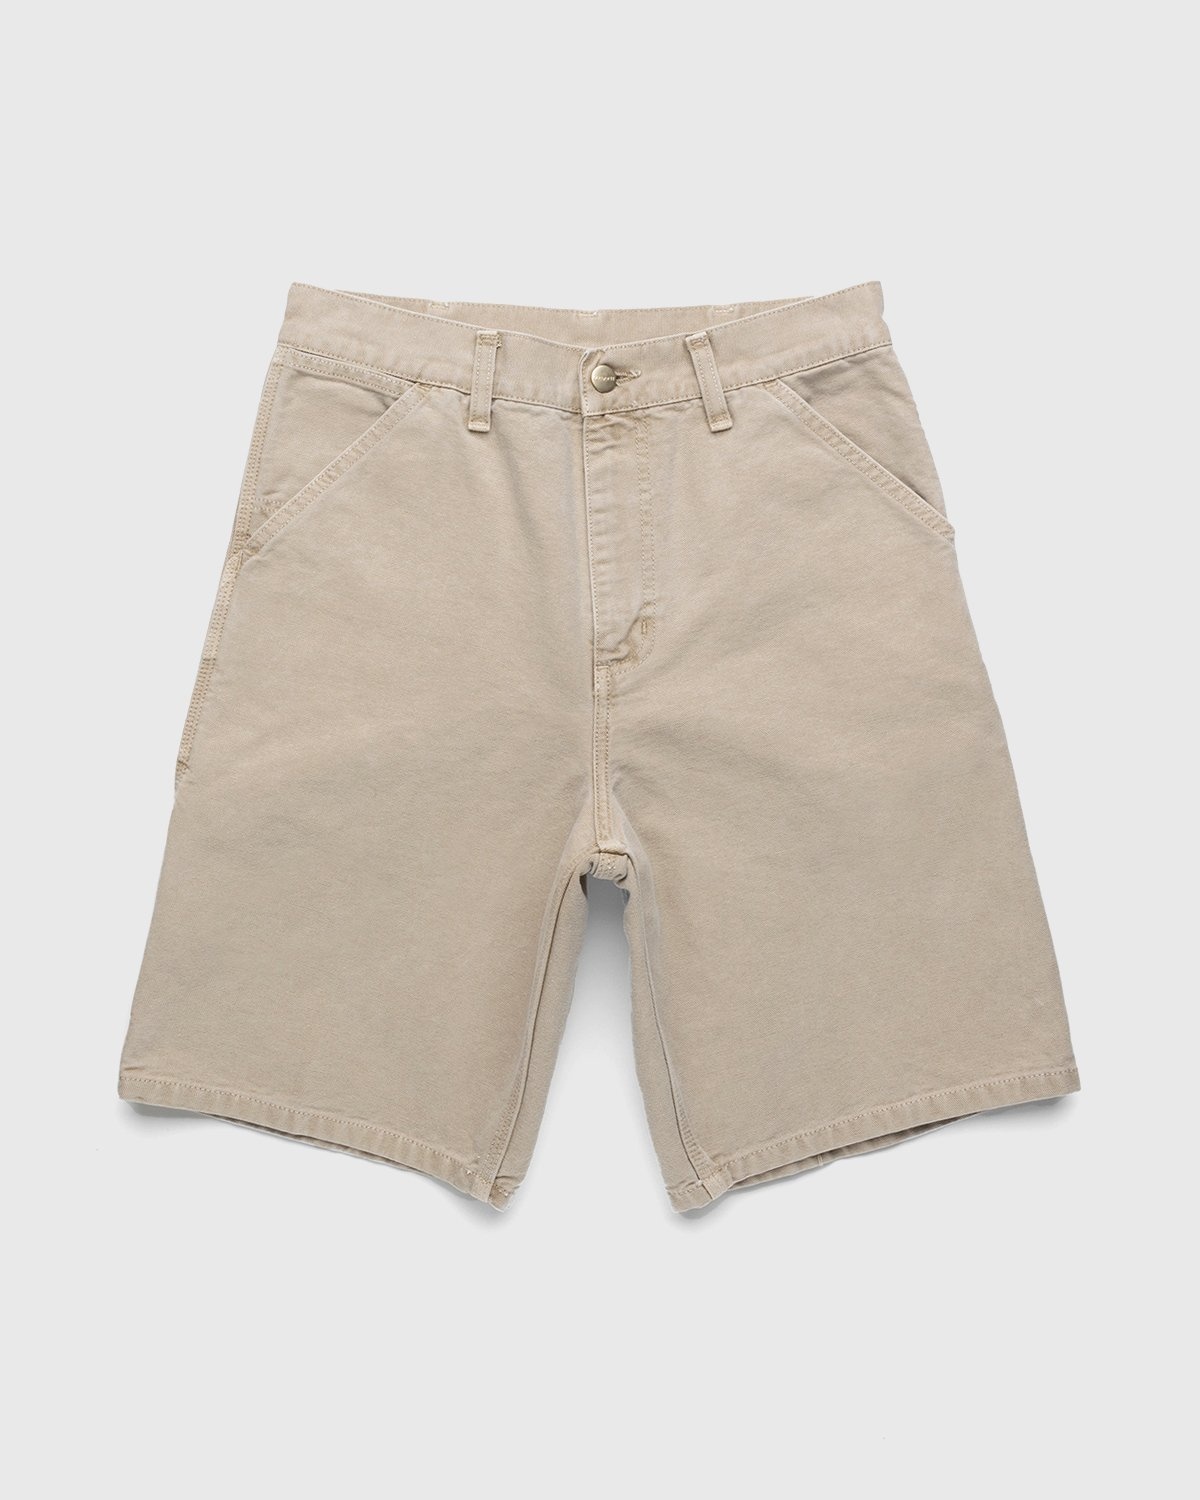 Carhartt WIP – Single Knee Short Dusty H Brown - Shorts - Brown - Image 1